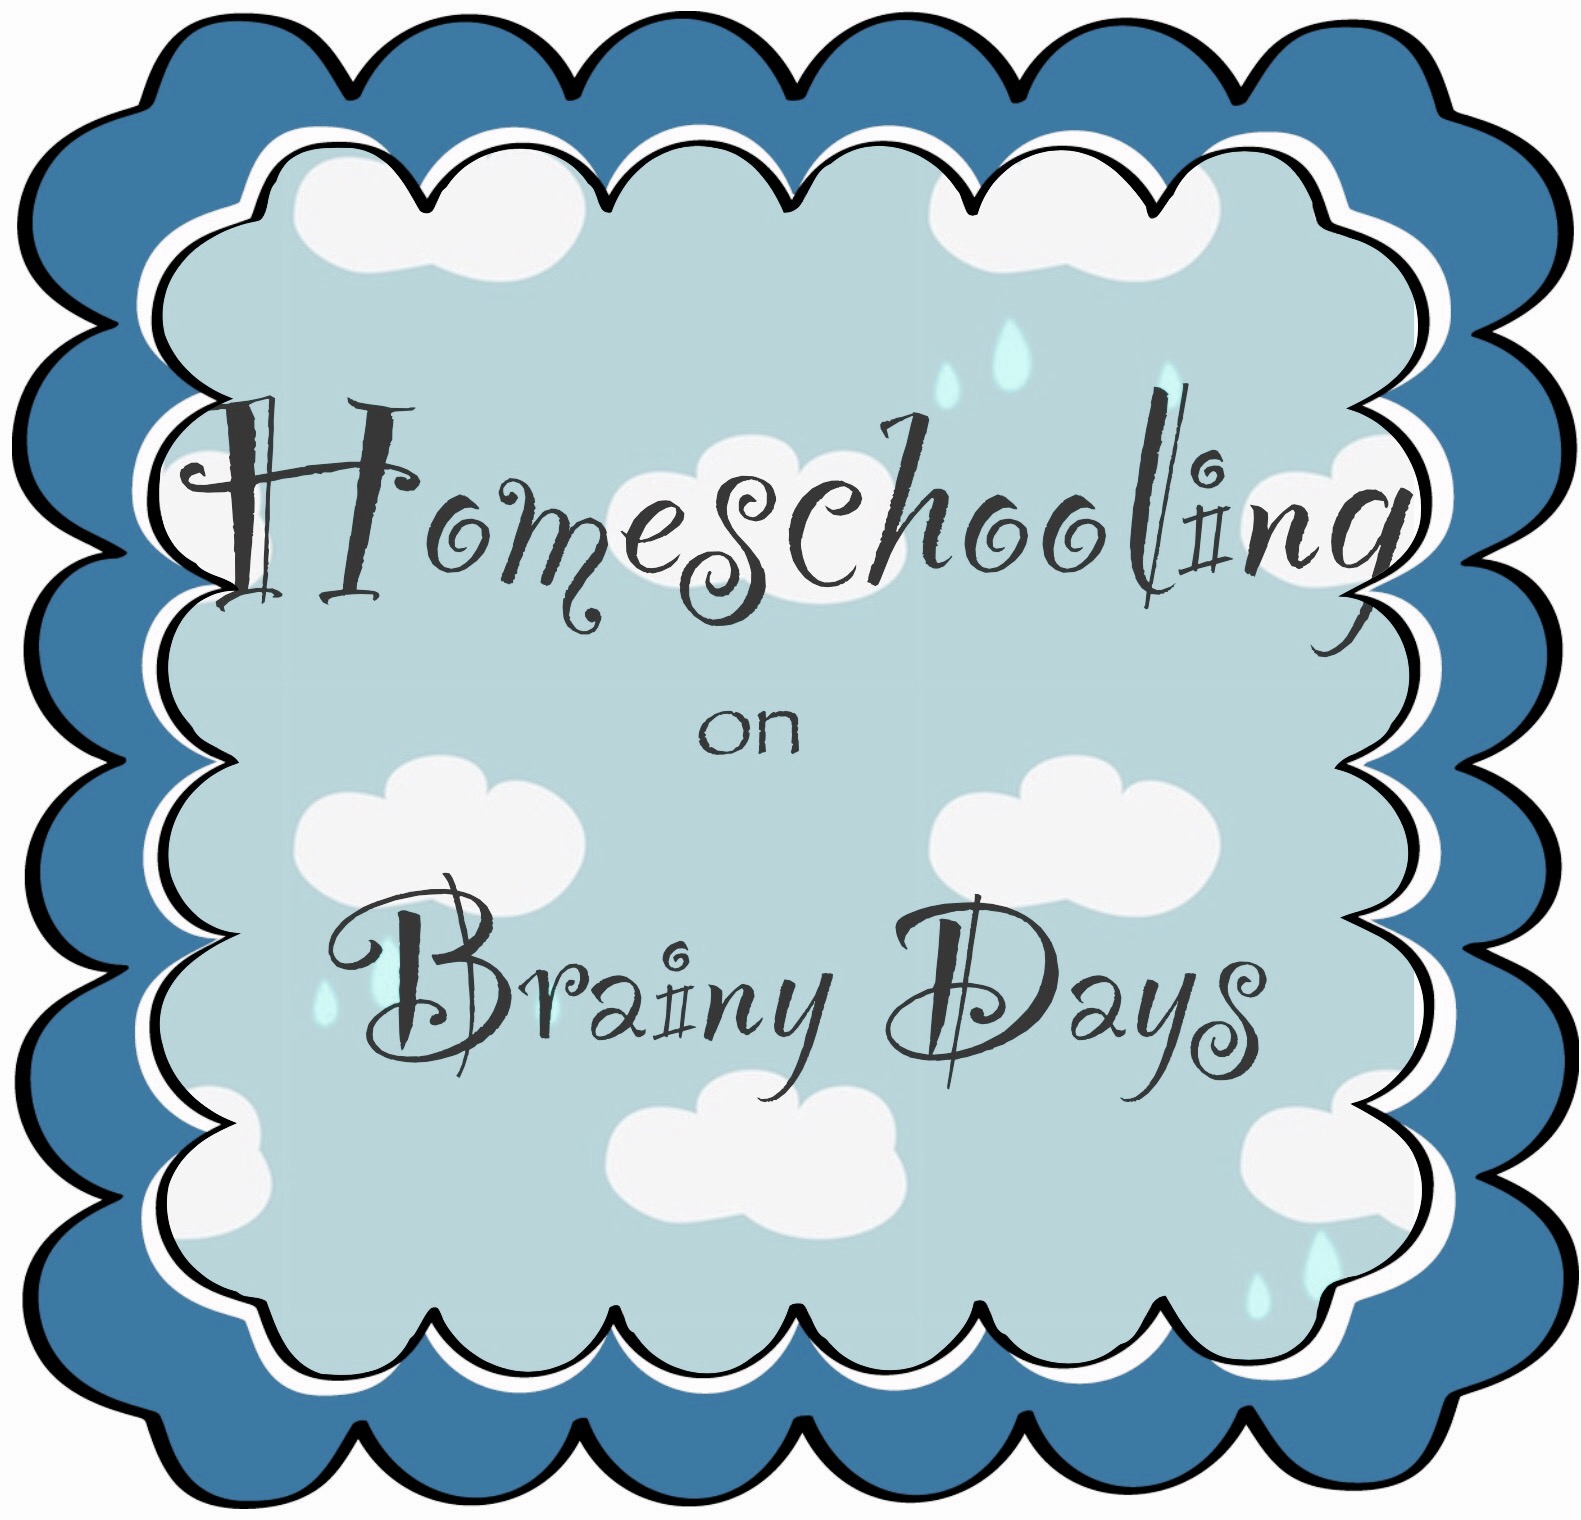 Homeschooling on Brainy Days